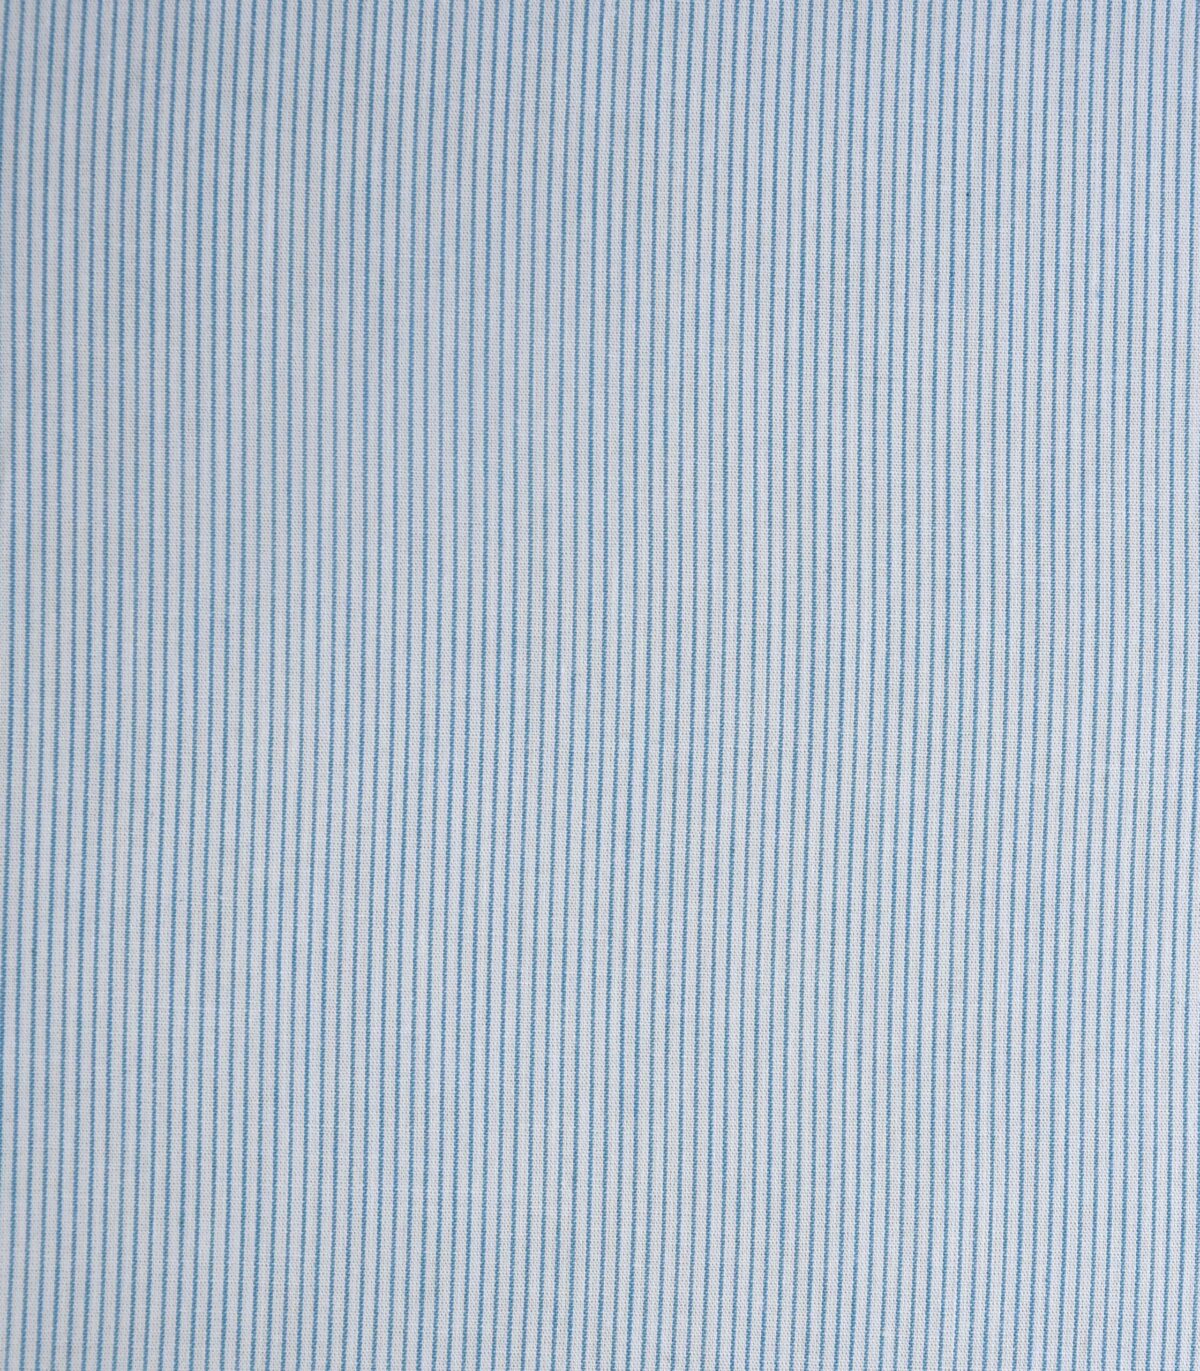 Cotton Blue Stripe Yarn Dyed Fabric